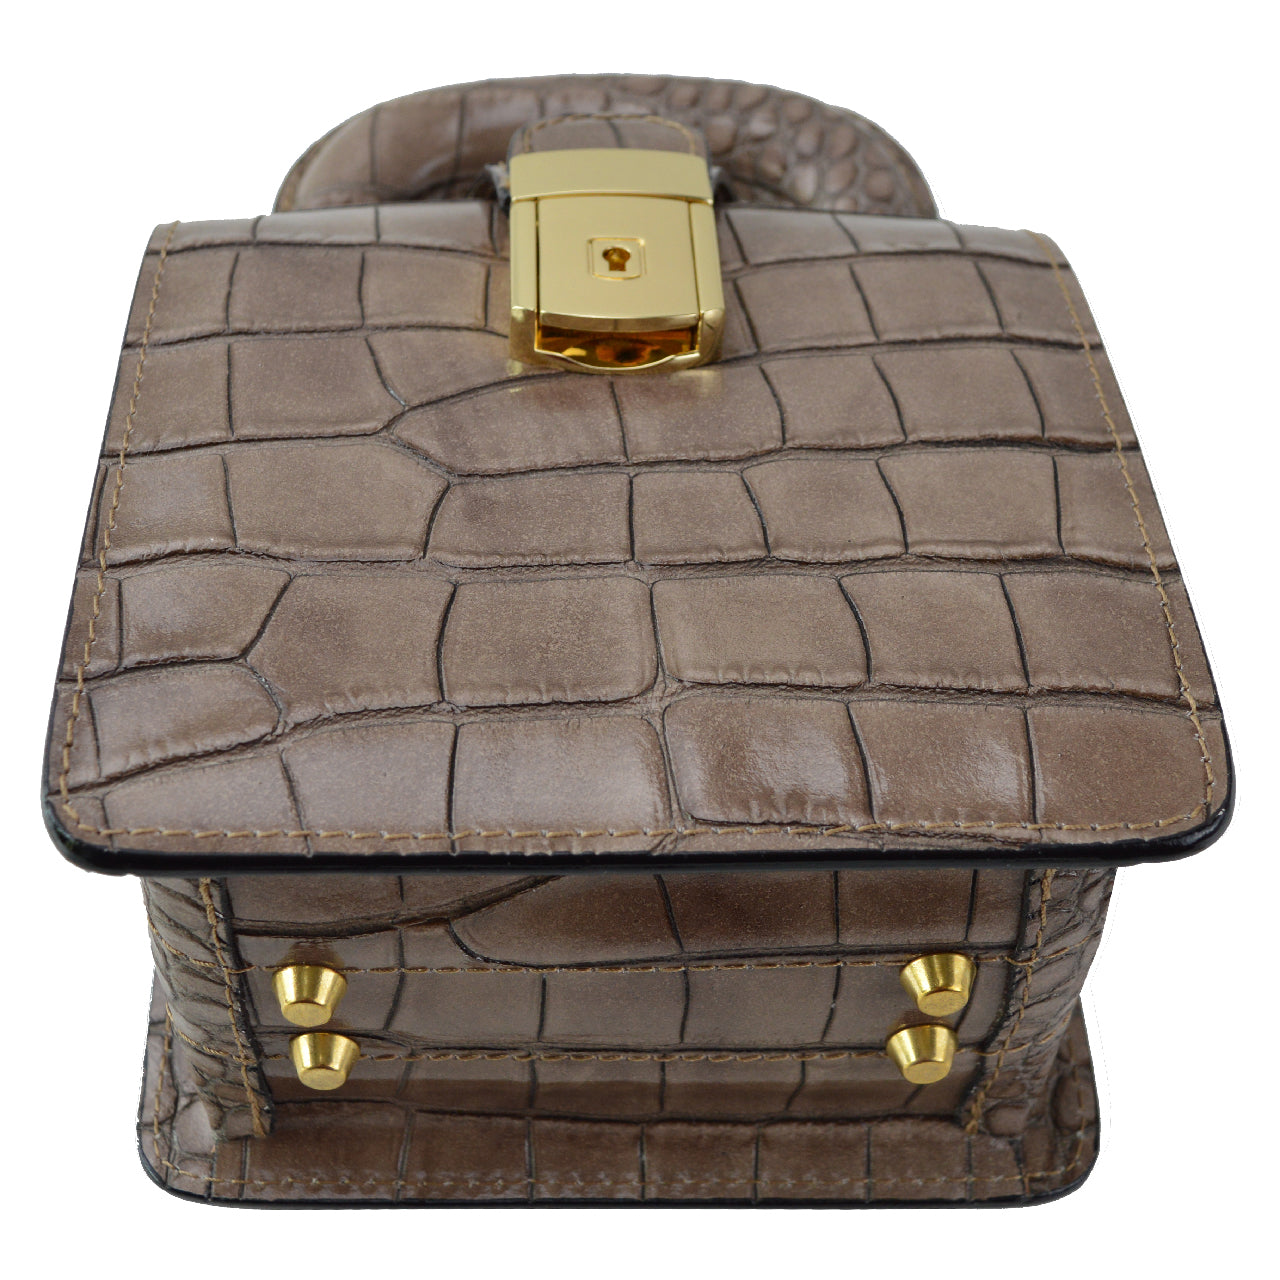 Pratesi Brunelleschi Handbag in genuine Italian leather - Brunelleschi Grey